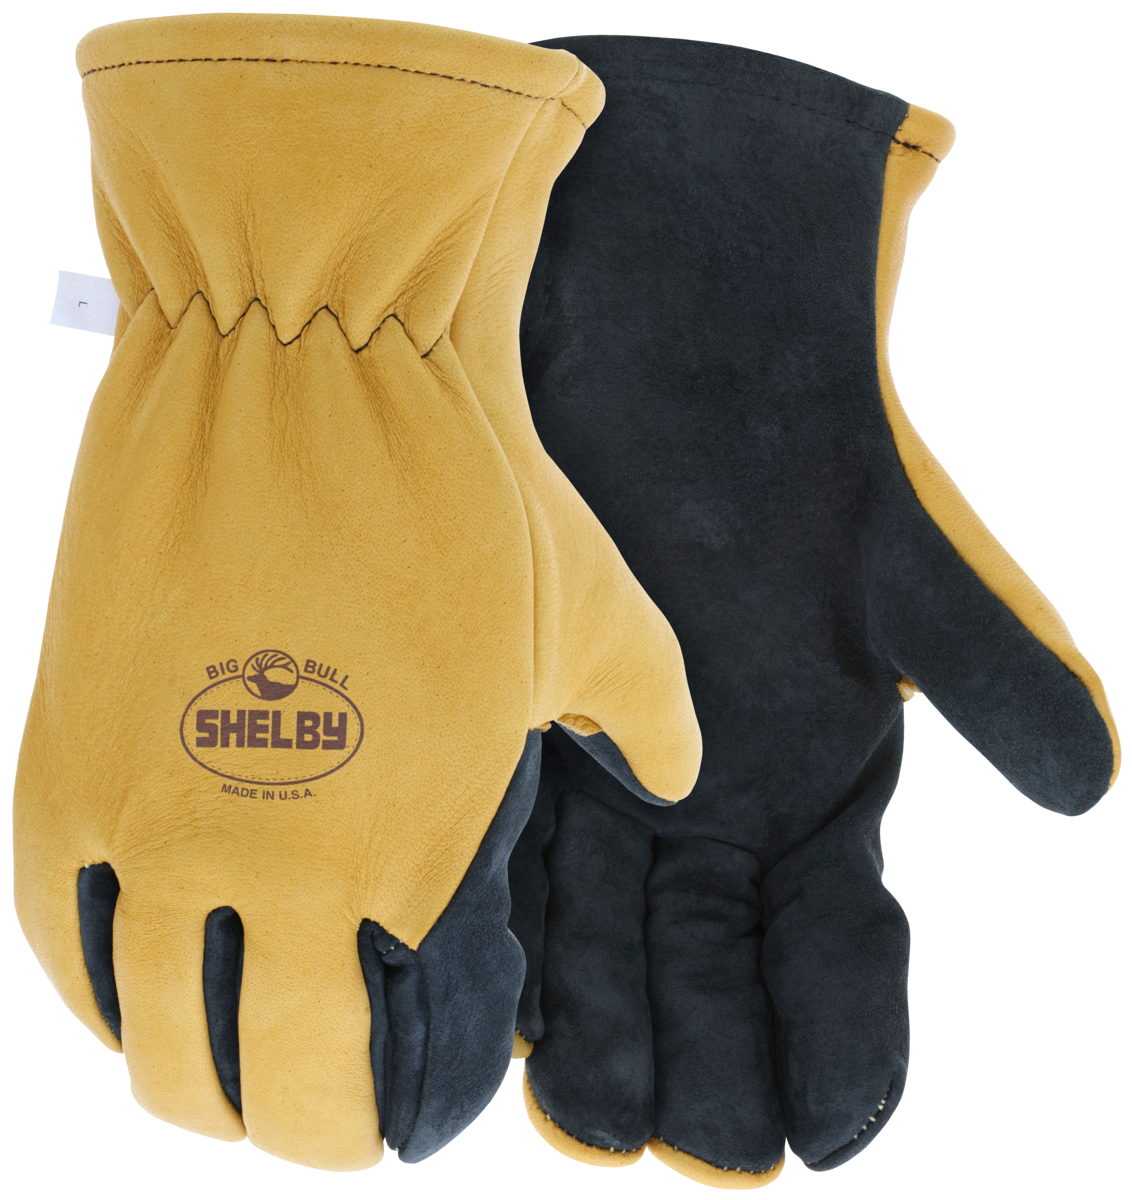 5280G - Shelby® Big Bull Fire Glove Gauntlet